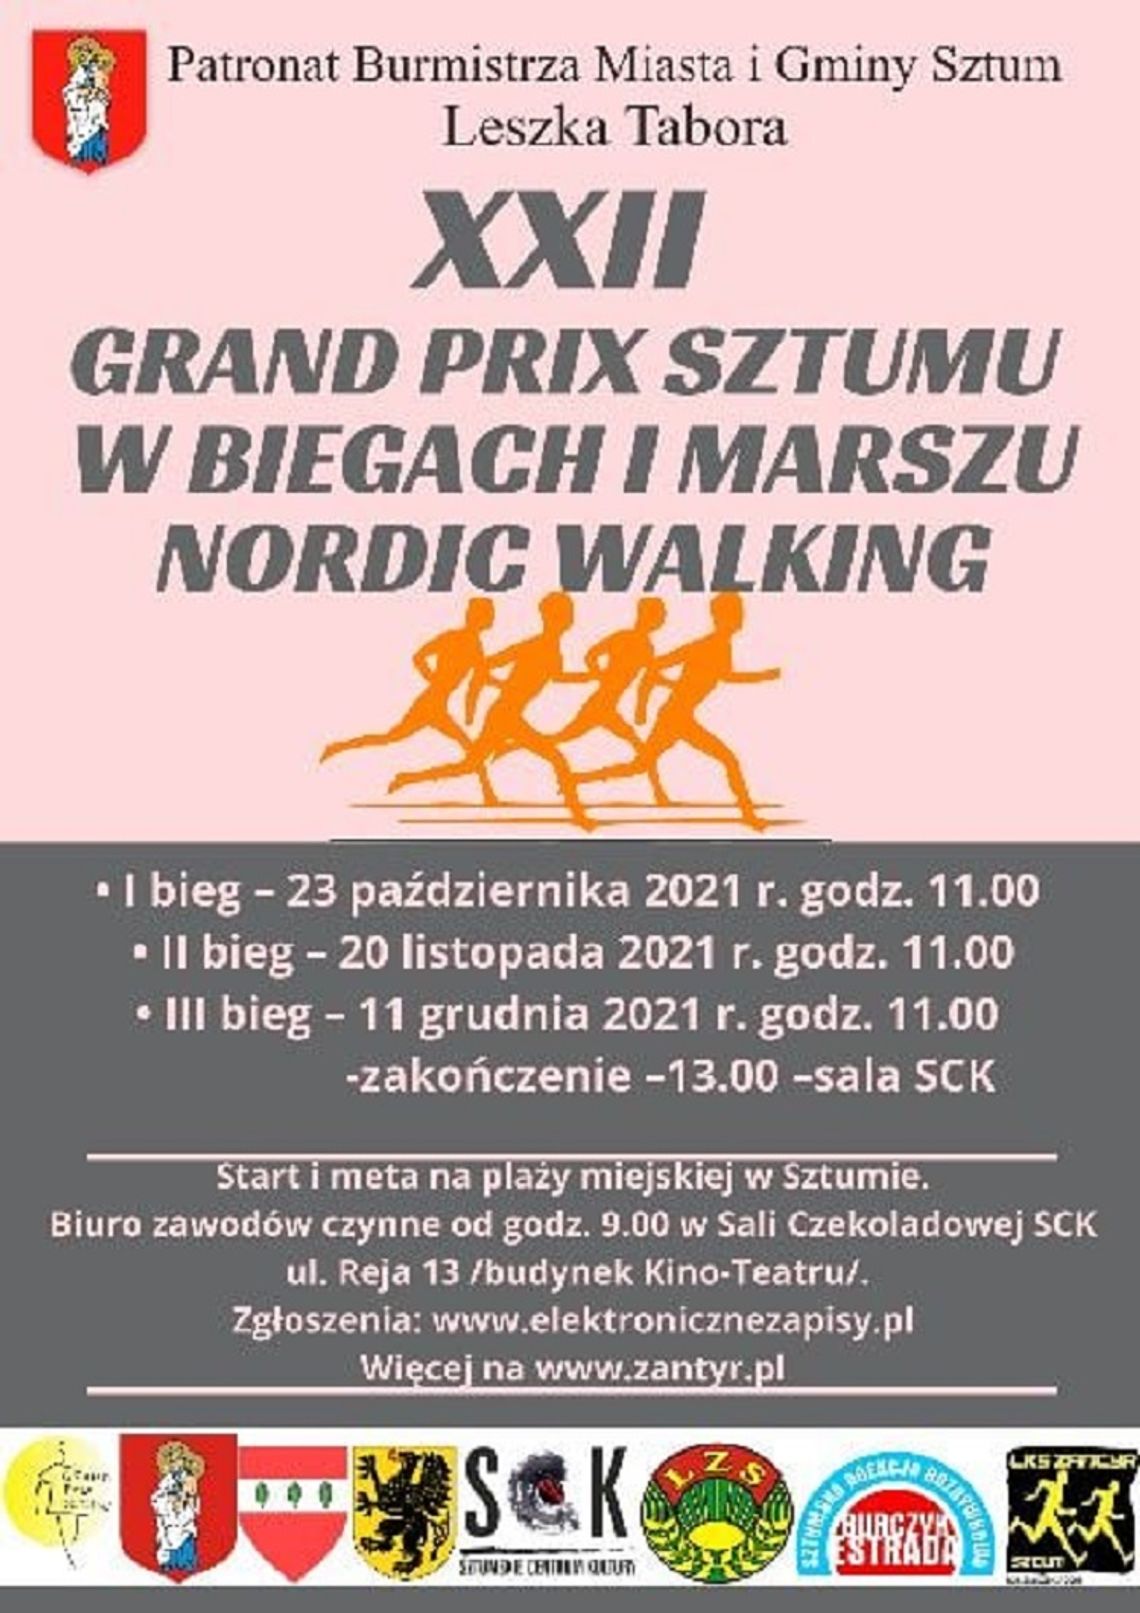 XXII Grand Prix Sztumu w Biegach i marszu Nordic Walking 2021 